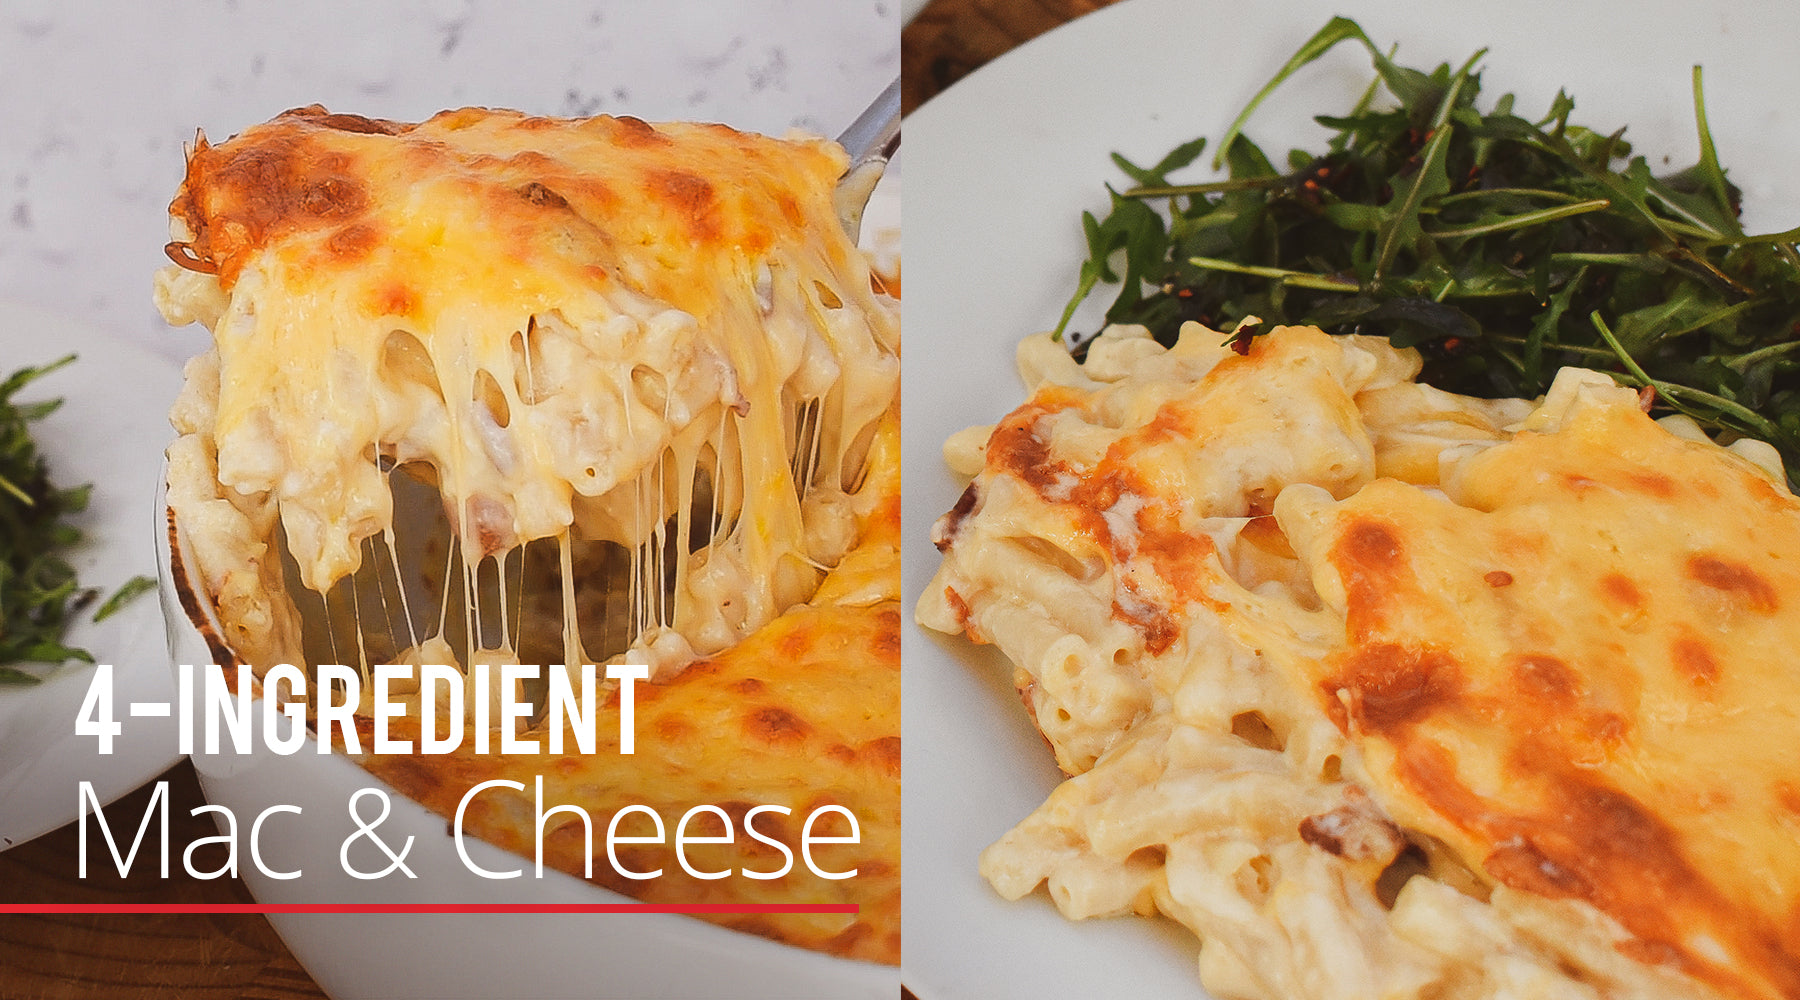 Four-Ingredient Mac & Cheese